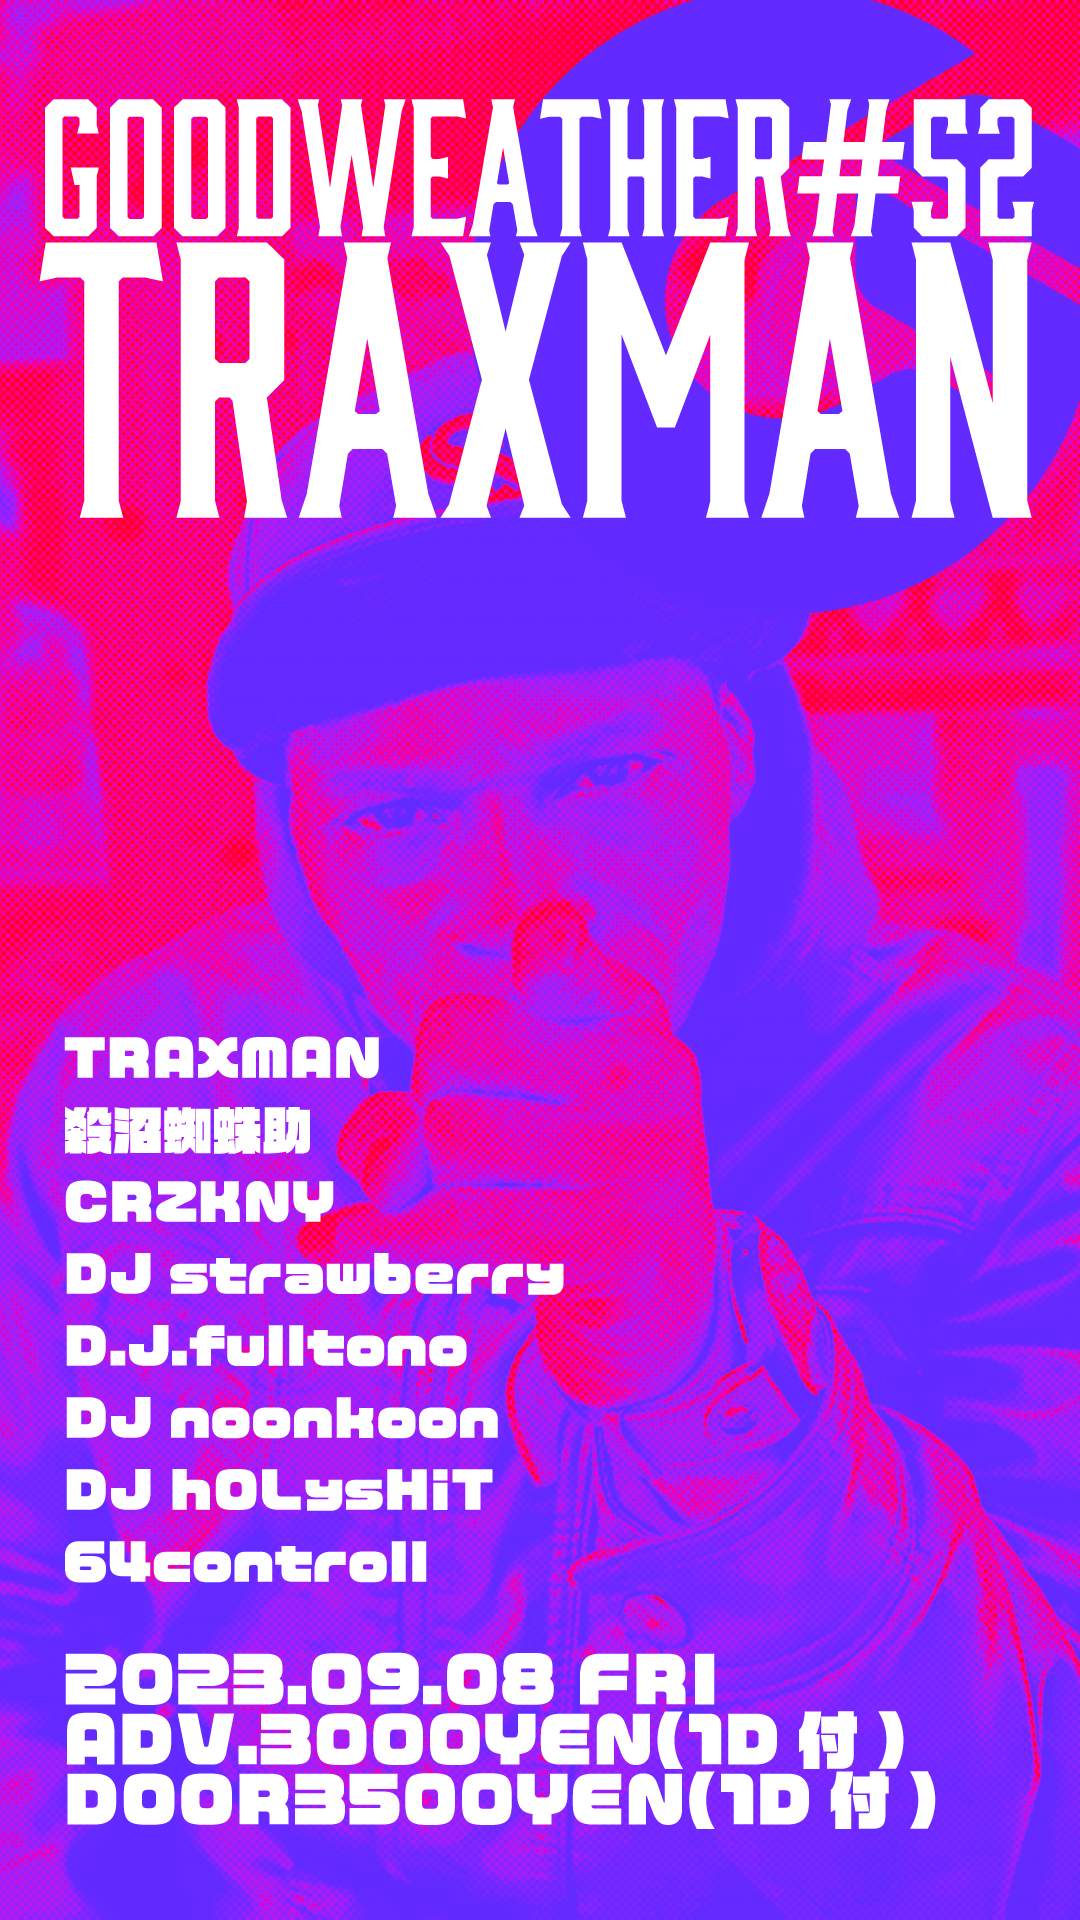 GOODWEATHER#52 'Traxman' - フライヤー表